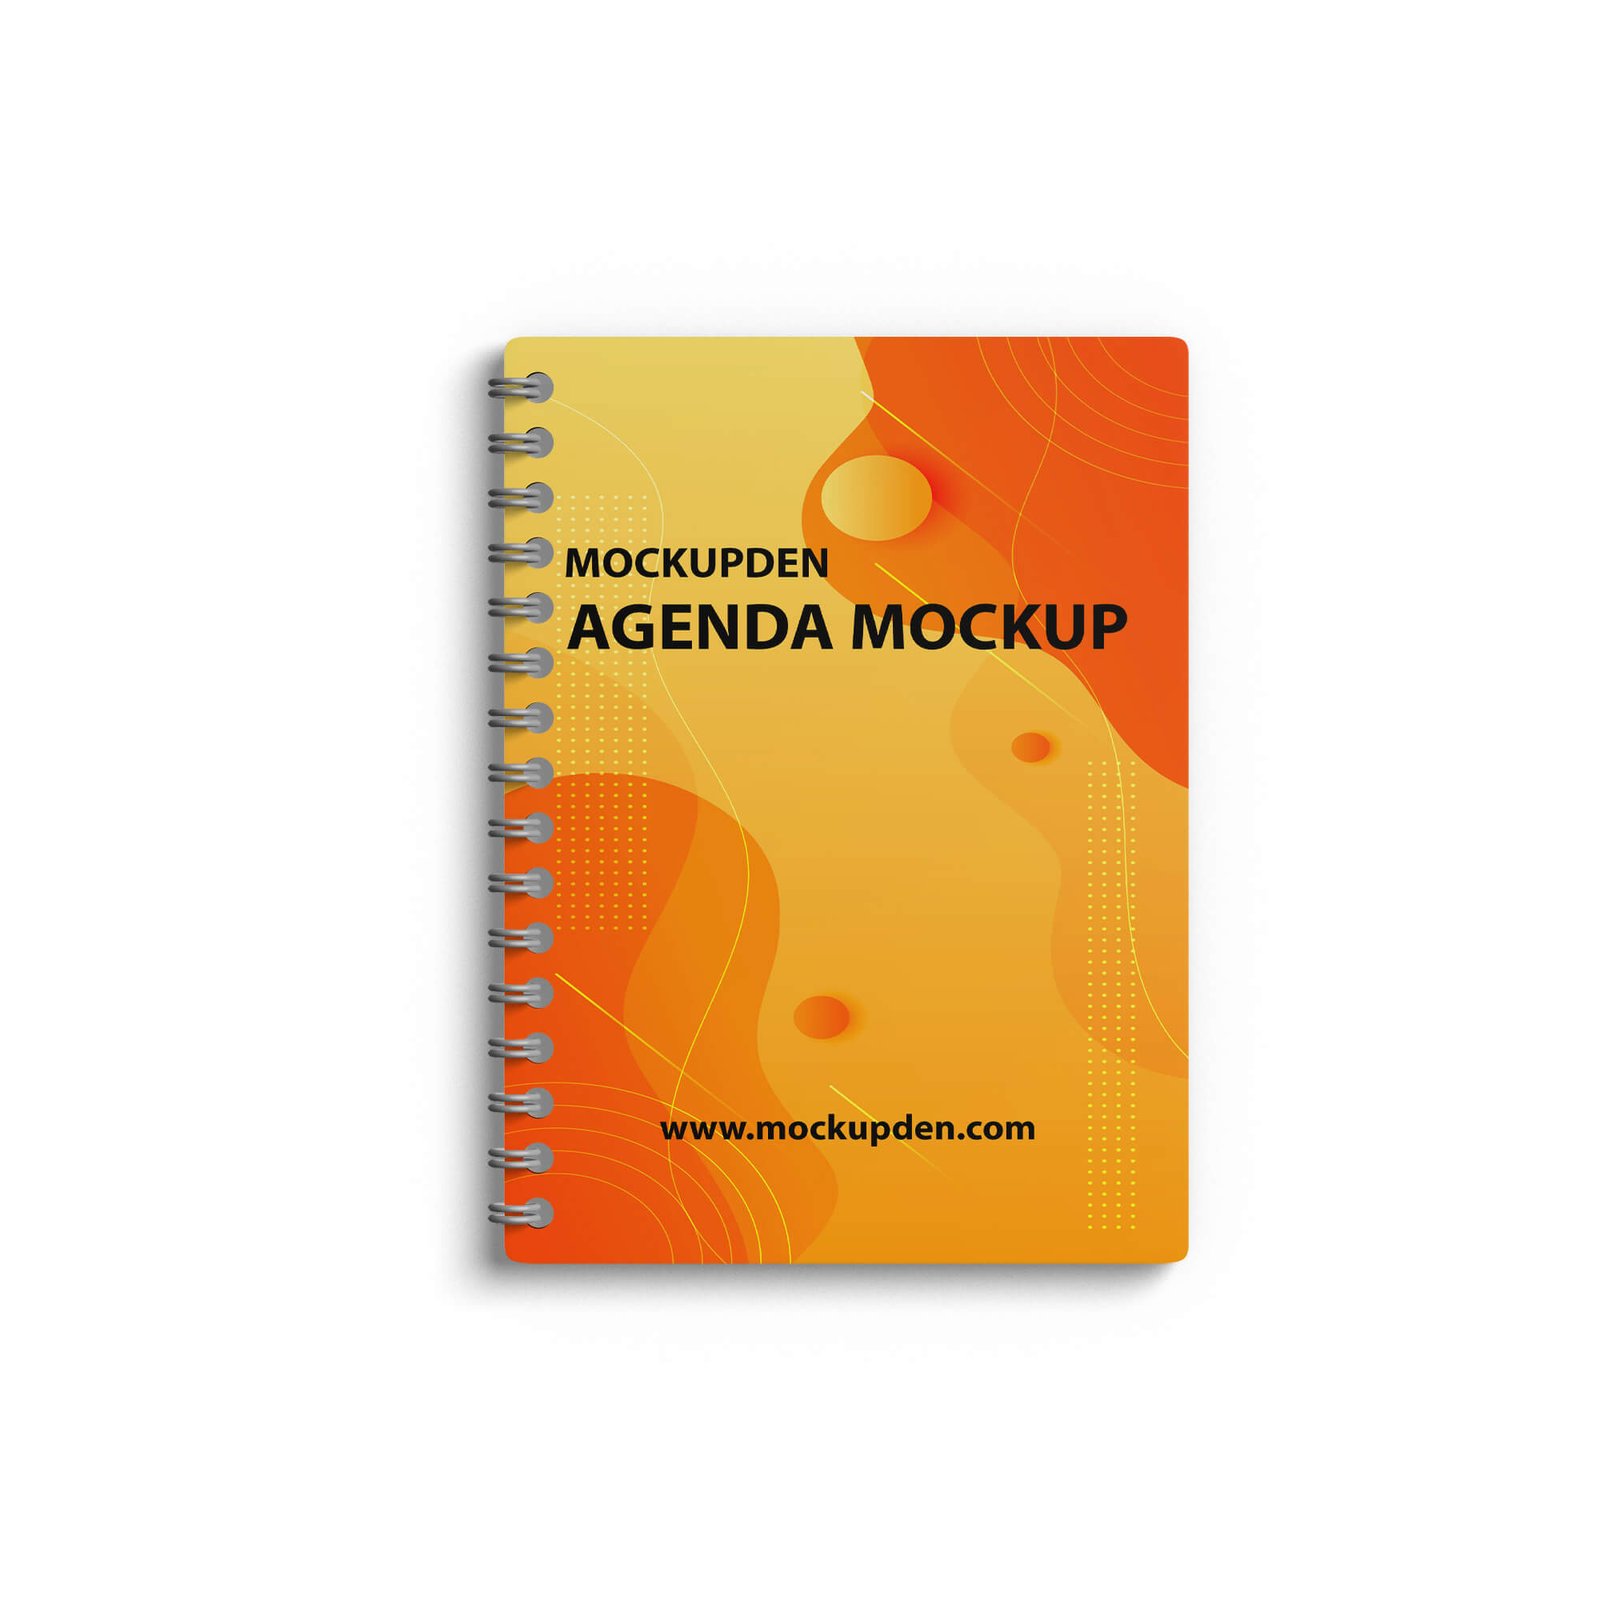 Design Free Agenda Mockup PSD Template (1)